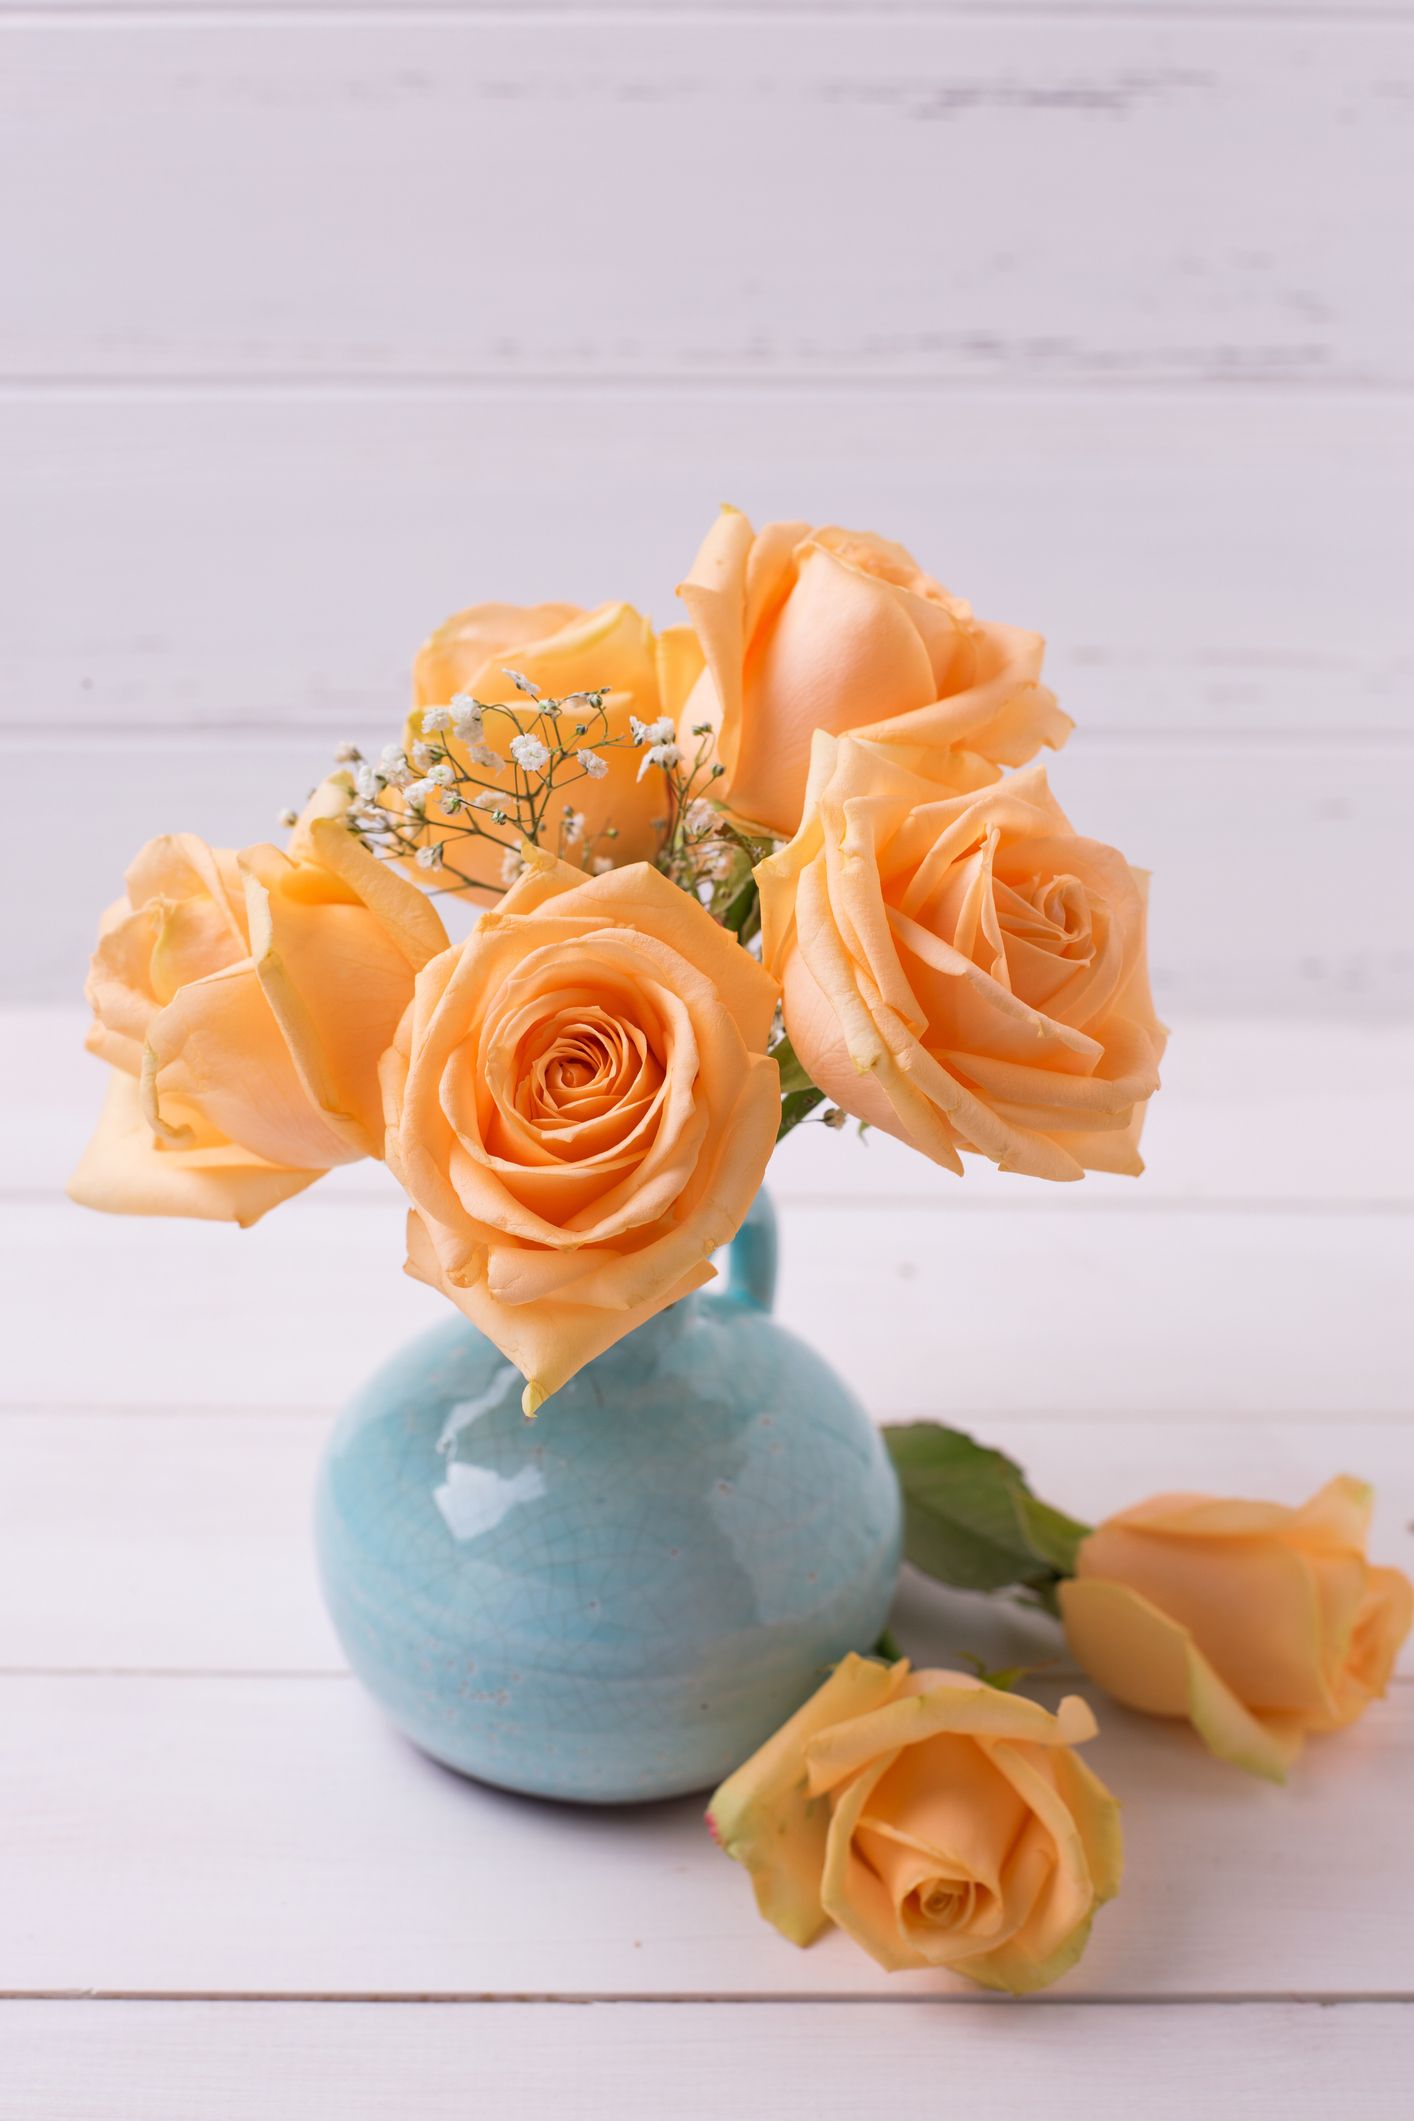 Dollhouse Miniature Beautiful Yellow & Orange Rose Flowers in Vase F1850 